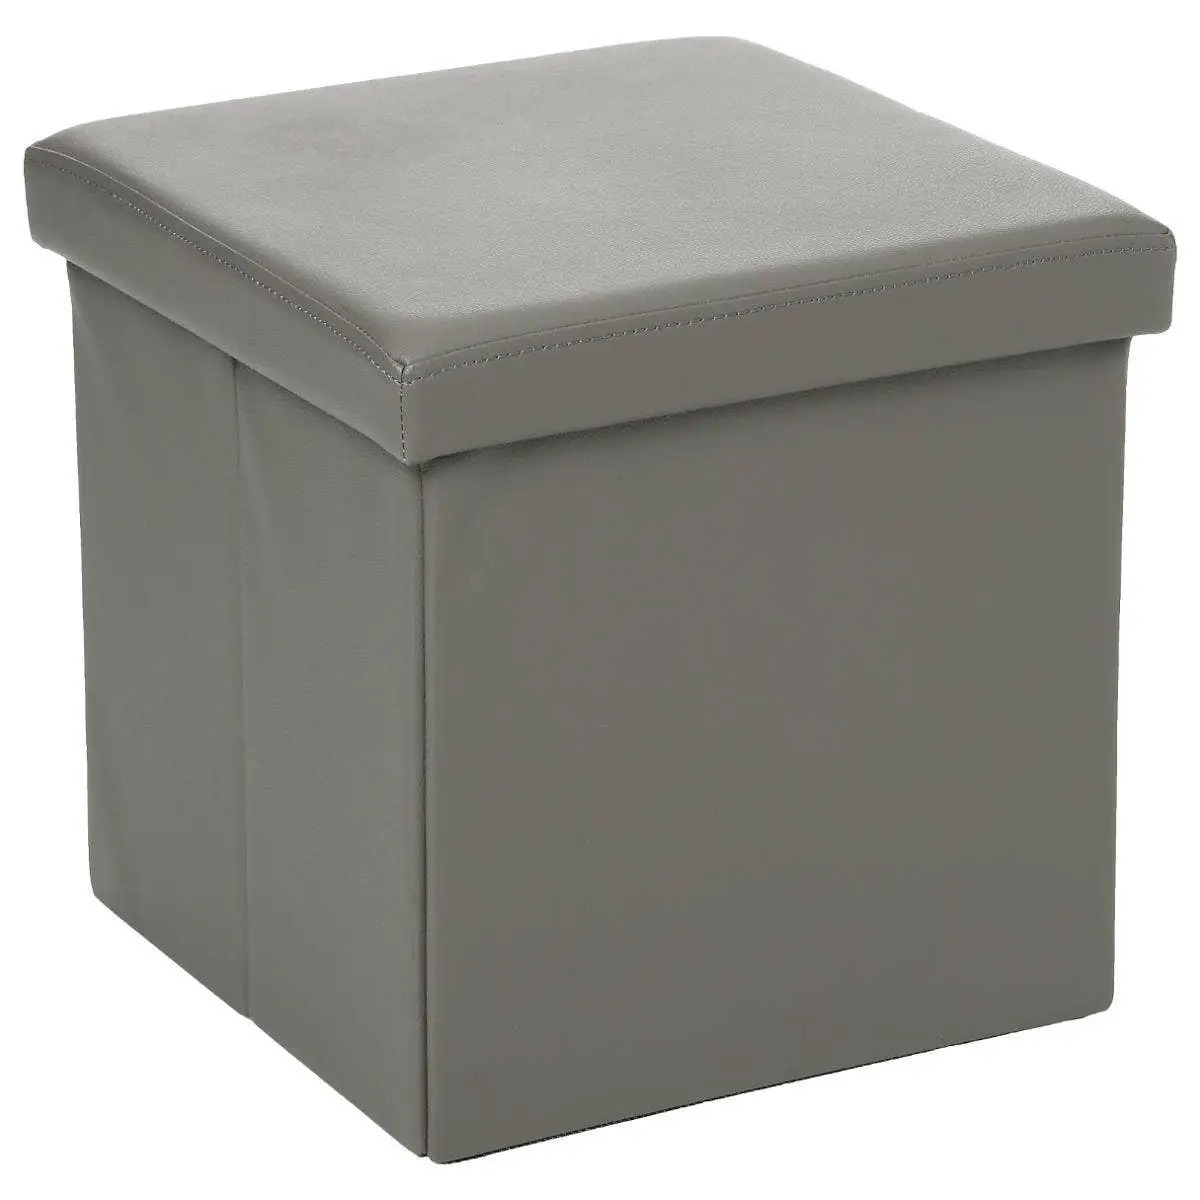 Poef hocker opbergbox grijs polyester-mdf 38 x 38 cm opvouwbaar